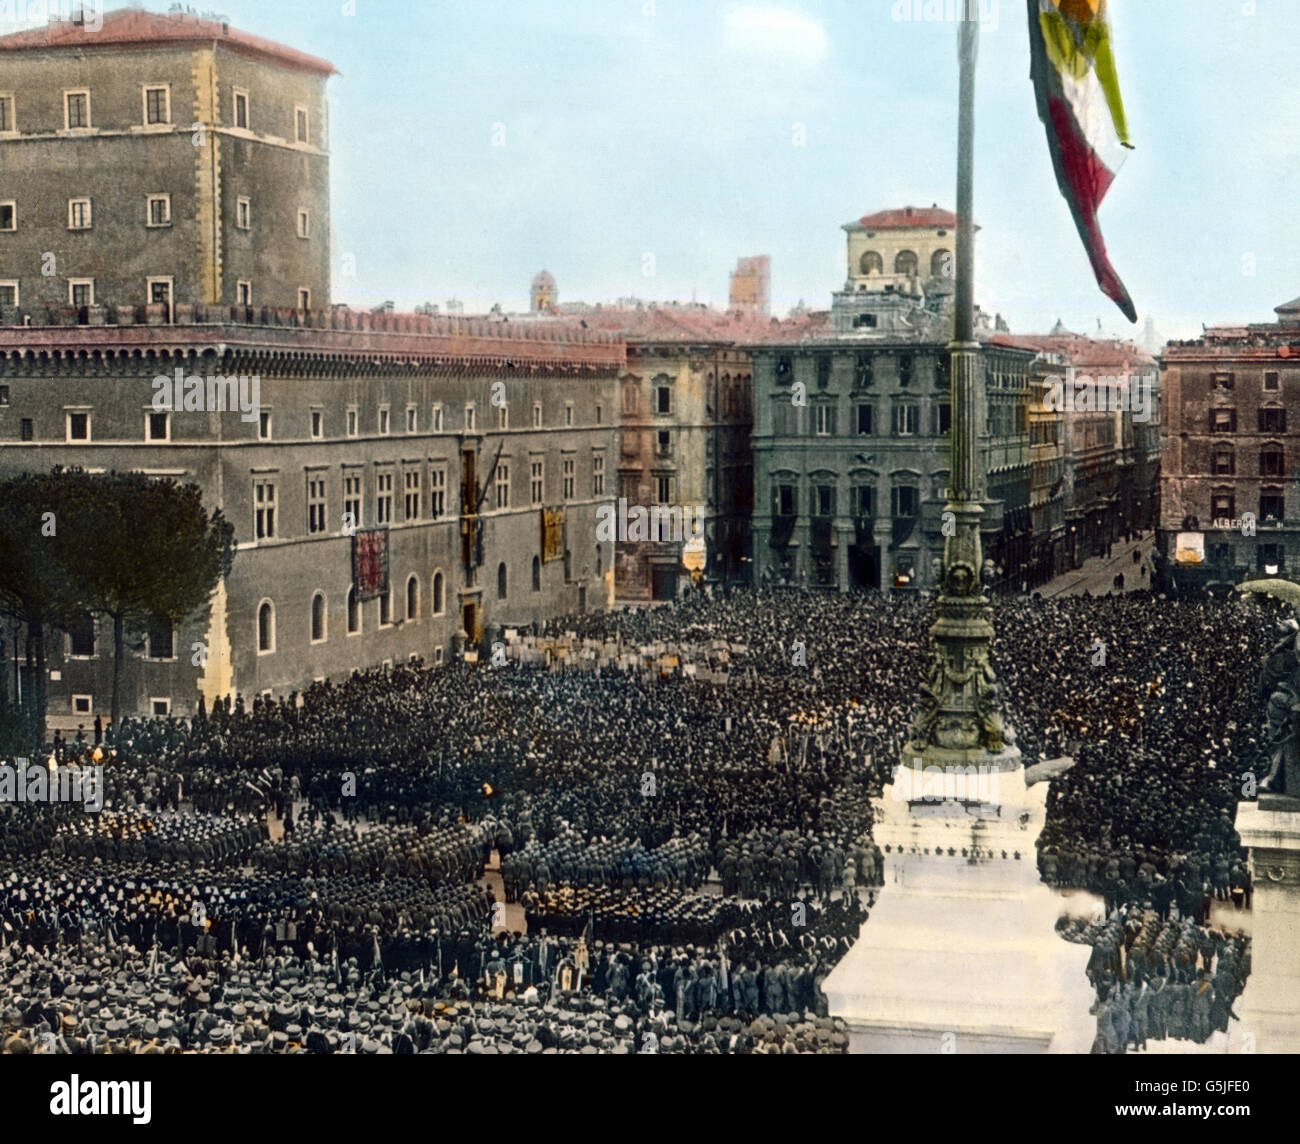 Soldaten sind angetreten auf der Piazza Venezia in Rom, Italien 1920er Jahre. Soldati raduno presso la piazza Venezia a Roma, Italia 1920s. Foto Stock